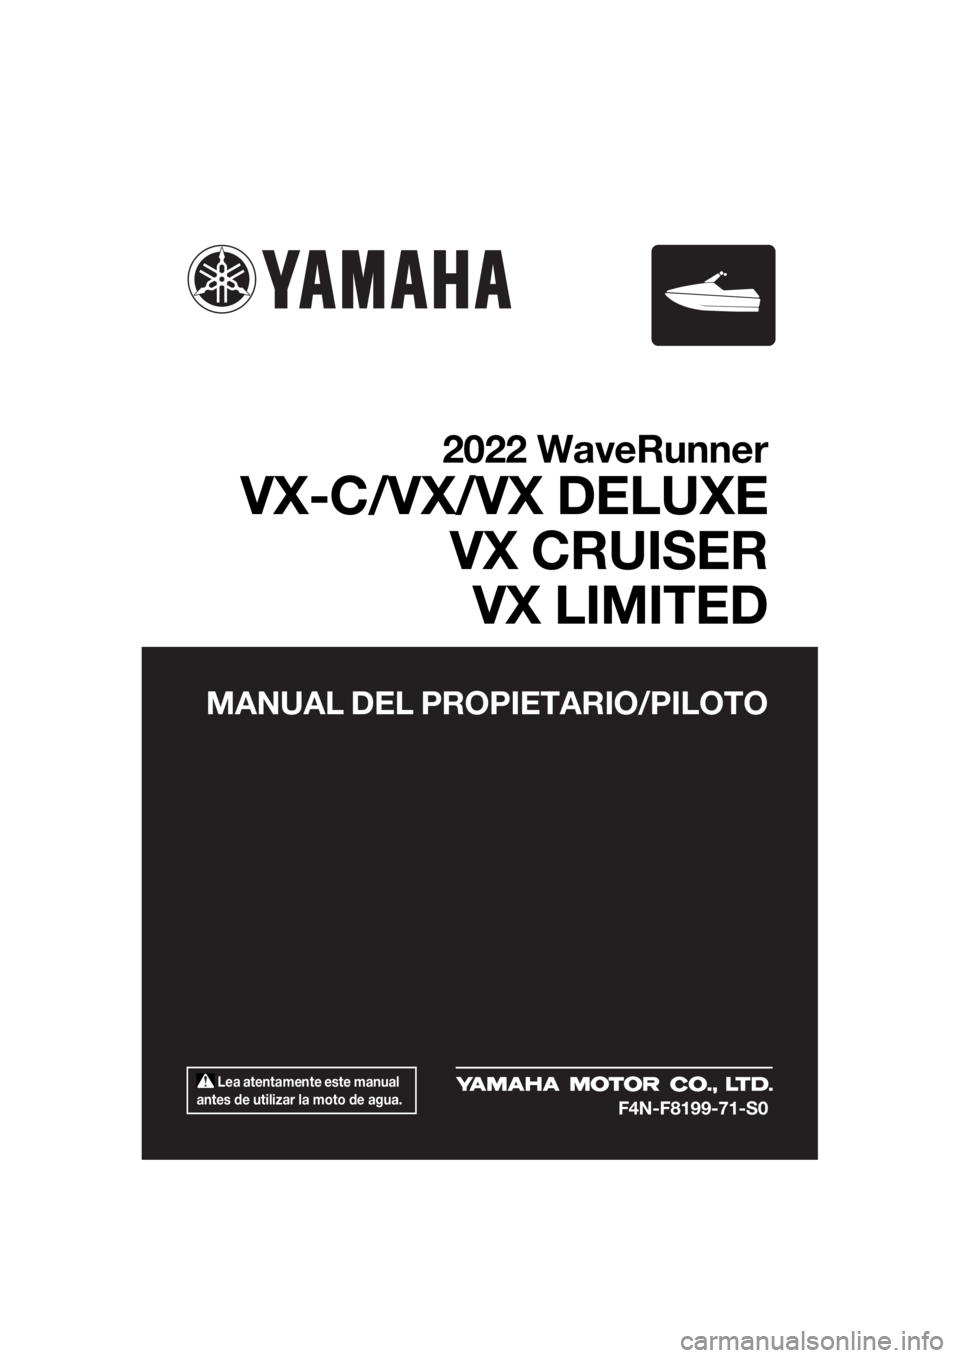 YAMAHA VX 2022  Manuale de Empleo (in Spanish)  Lea atentamente este manual 
antes de utilizar la moto de agua.
MANUAL DEL PROPIETARIO/PILOTO
2022 WaveRunner
VX-C/VX/VX DELUXE VX CRUISERVX LIMITED
F4N-F8199-71-S0
UF4N71S0.book  Page 1  Thursday, A